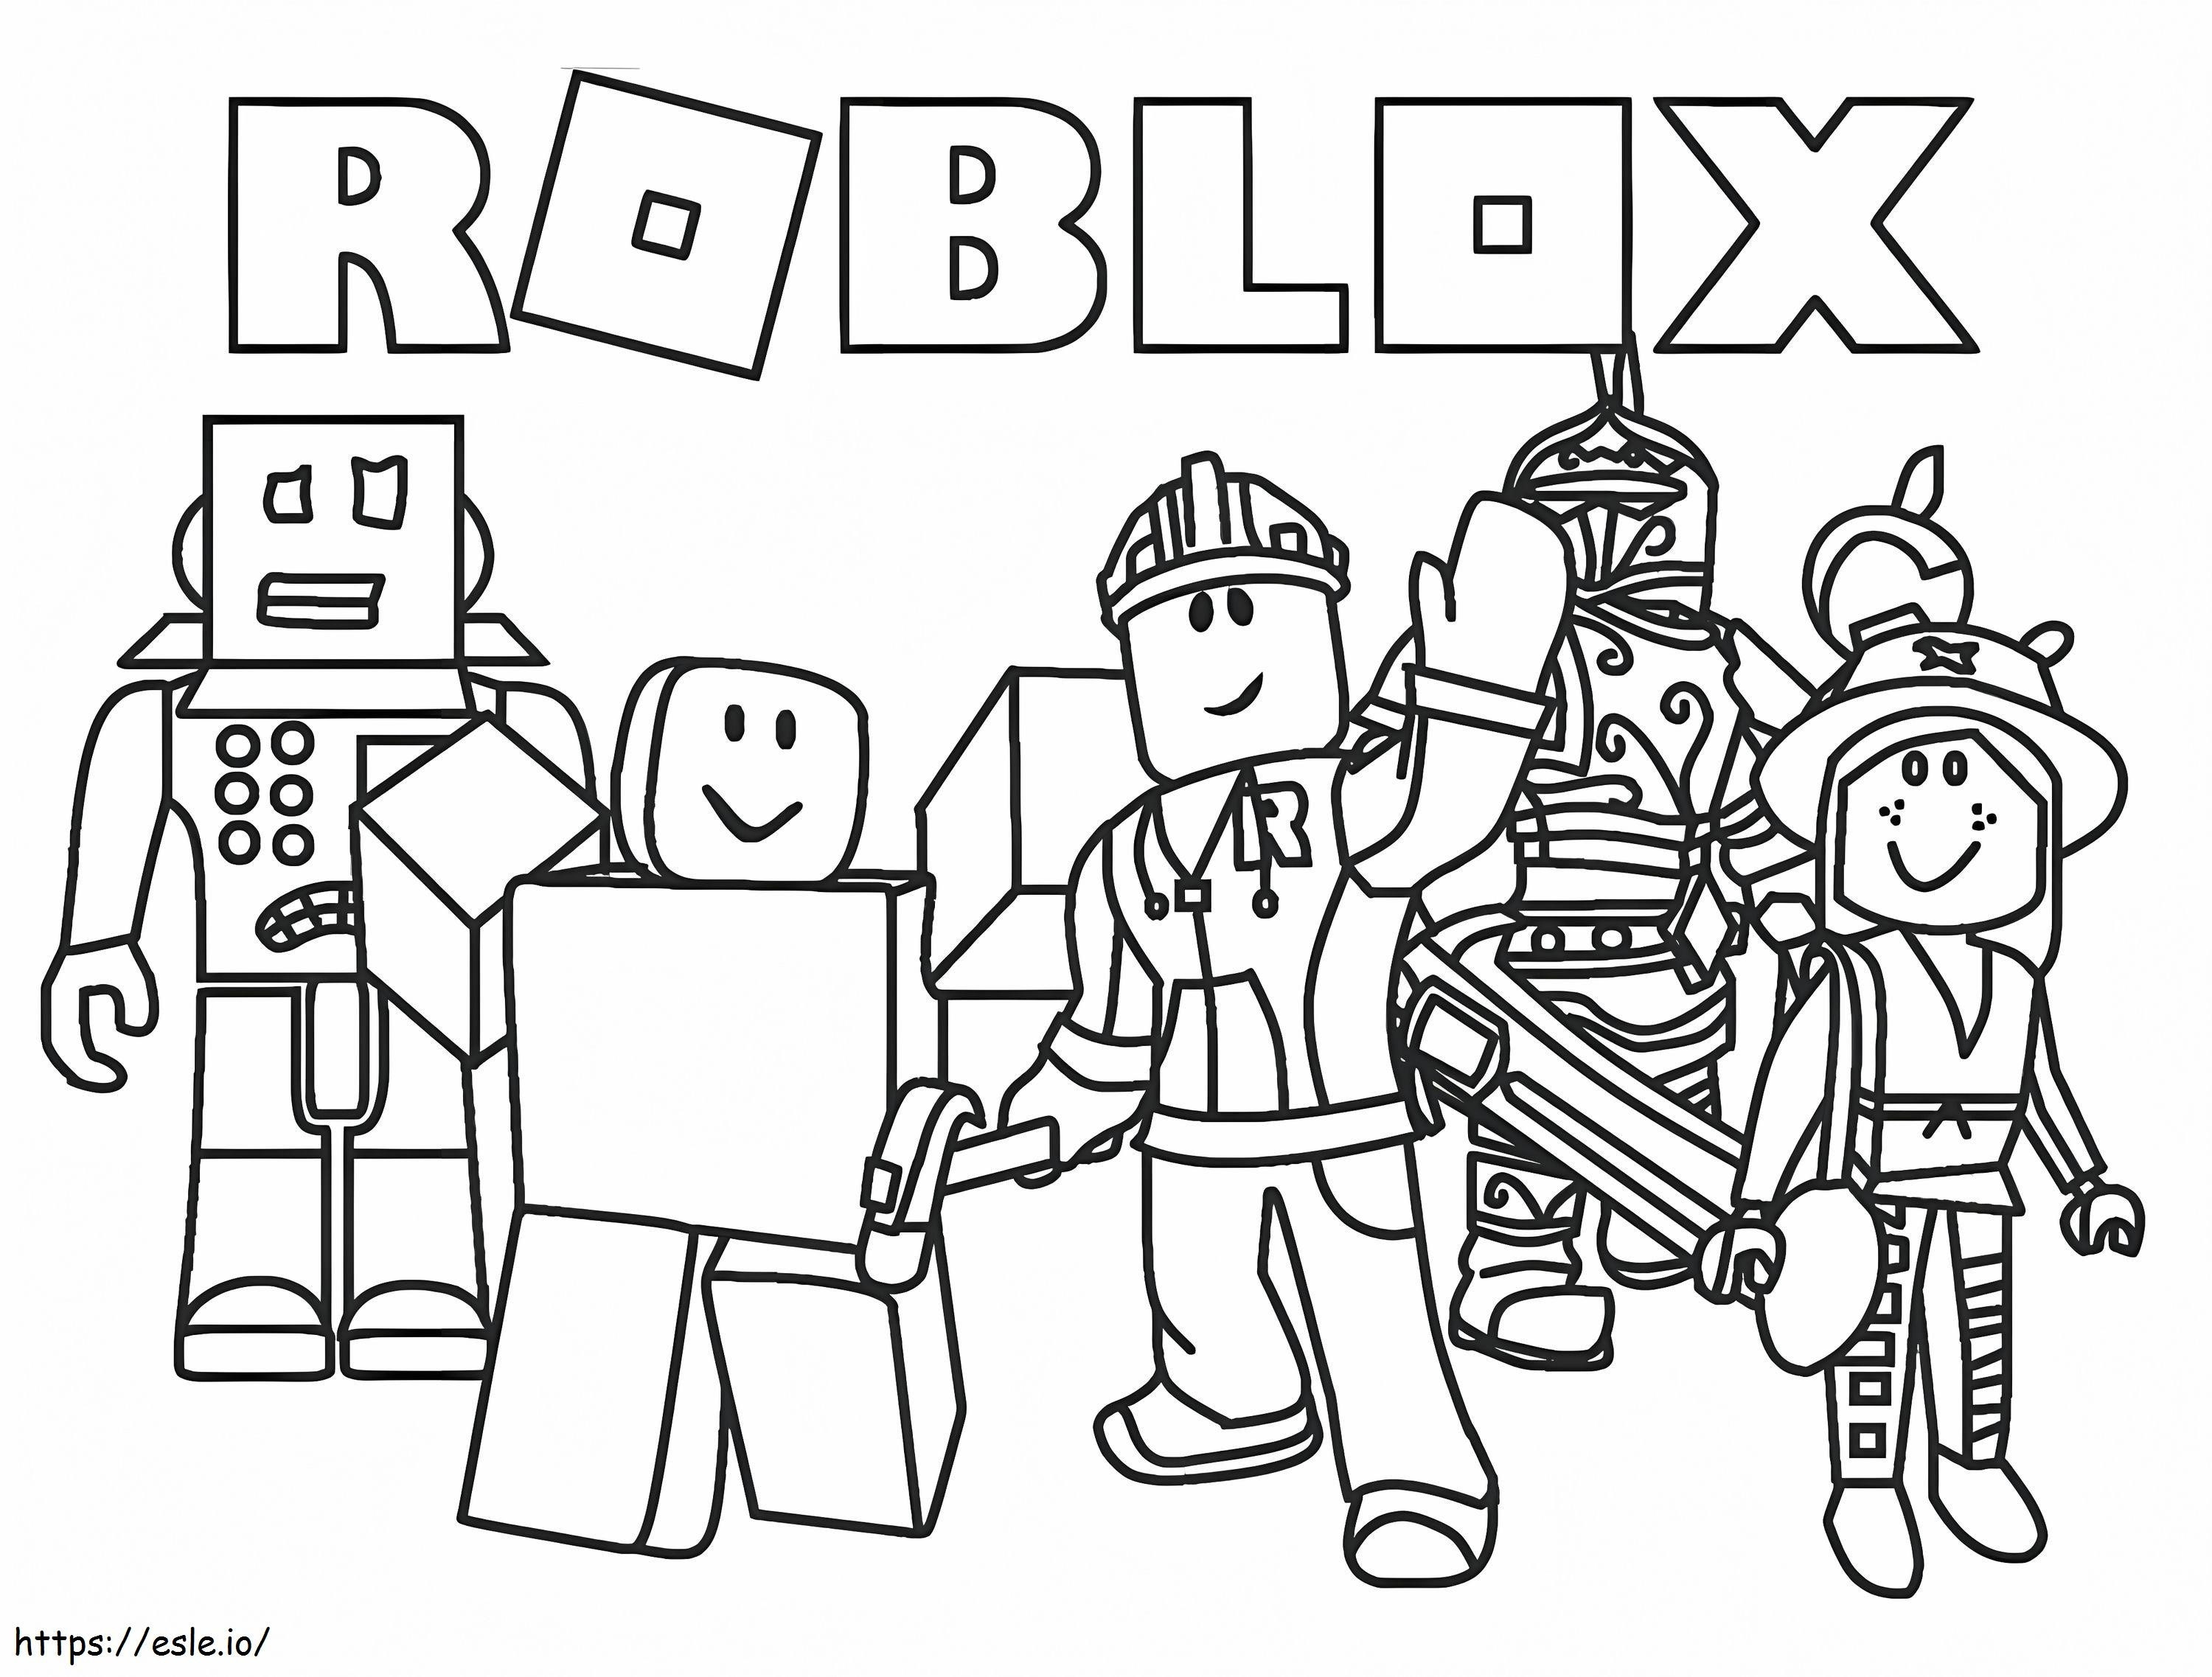 Roblox-personages kleurplaat kleurplaat